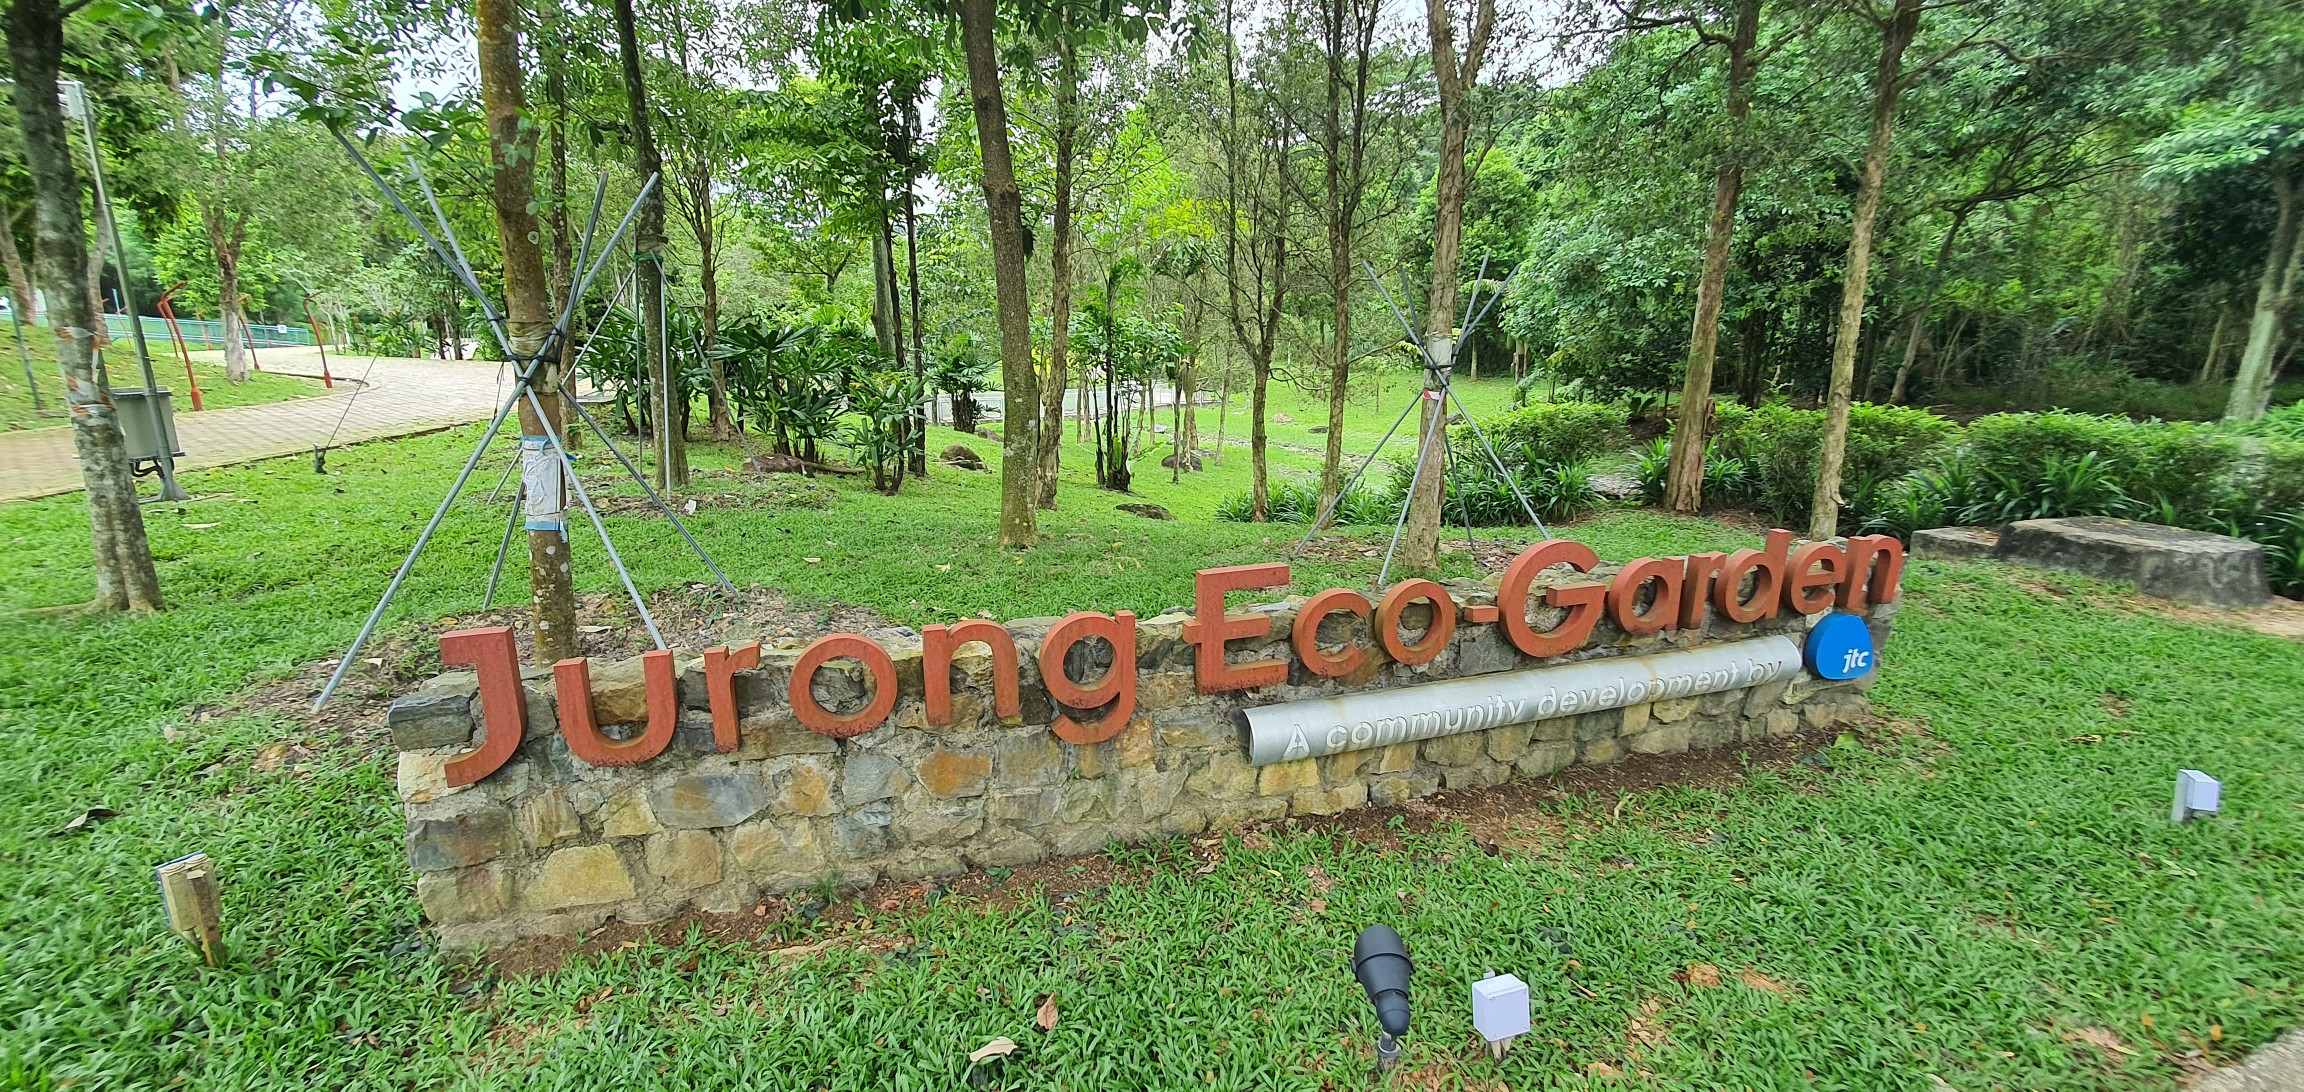 Jurong Eco-Garden Hidden Park at the Fringe of NTU